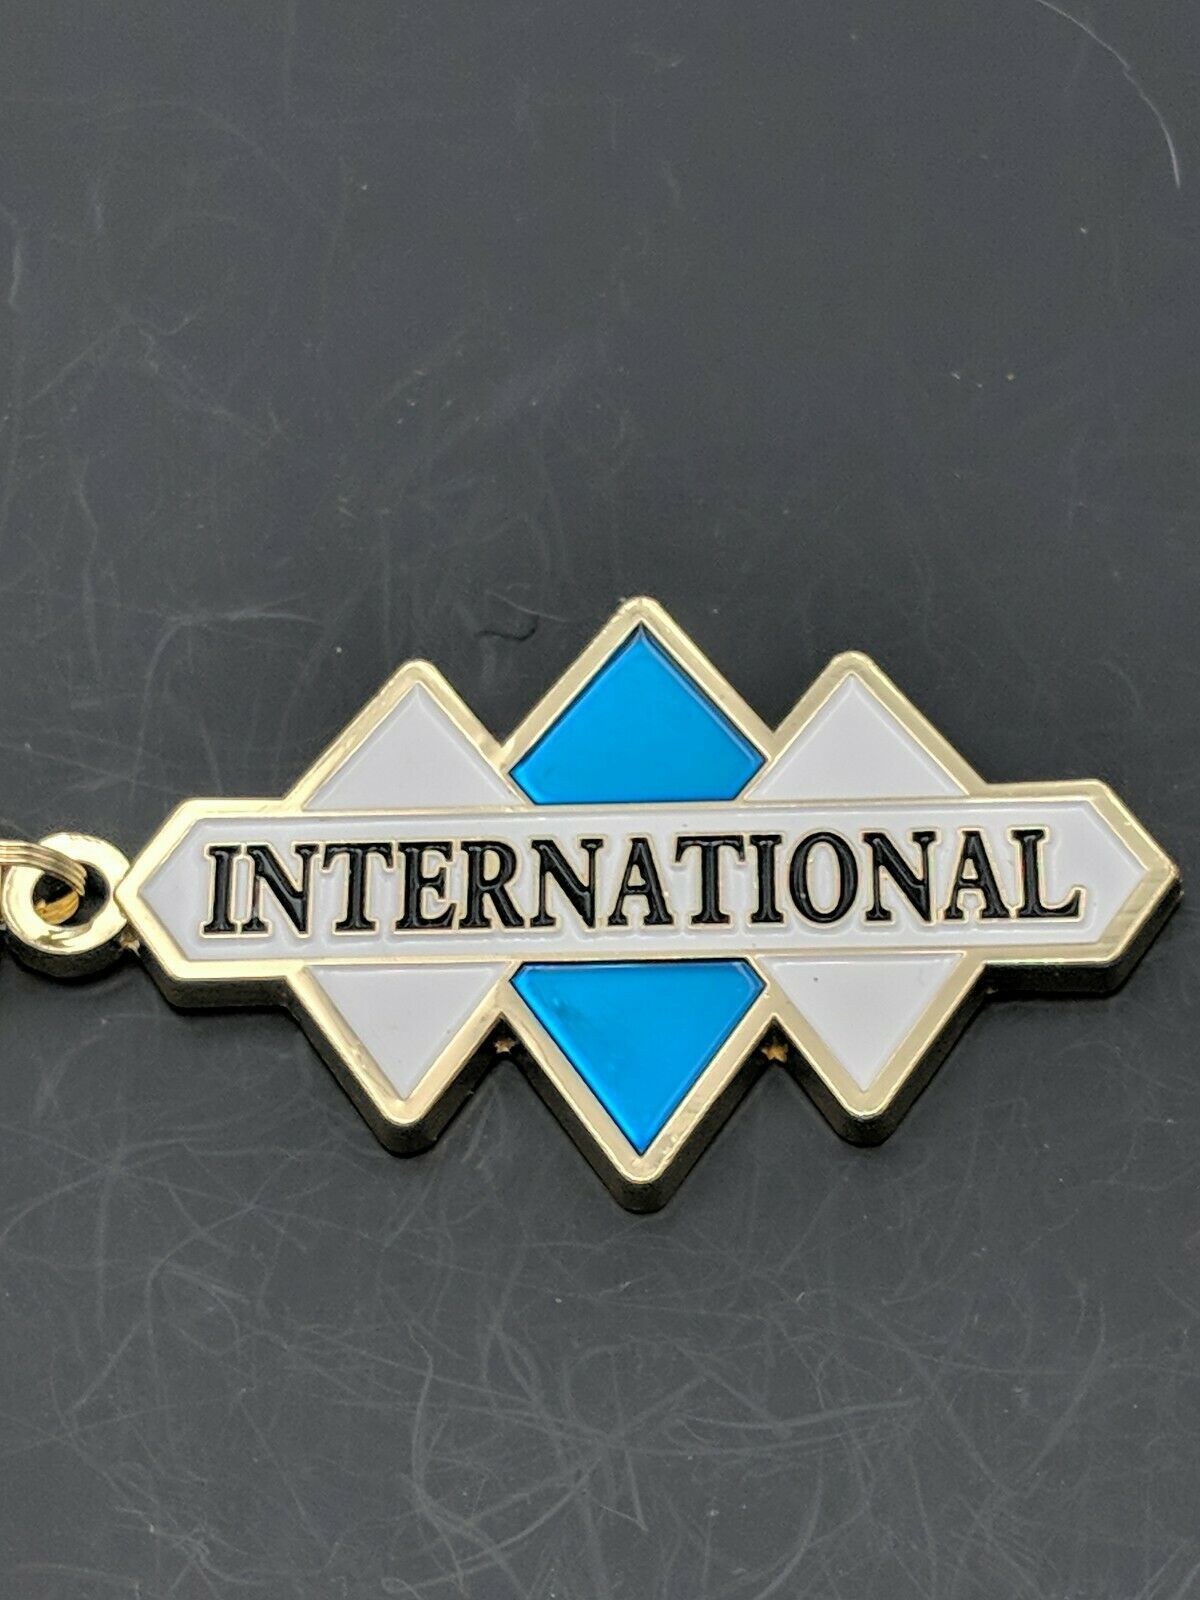 Nickel Finish|imitation Gold Finish|borg Warner - International triple diamond logo emblem keychain/backpack jewelry. (j1) (e11)